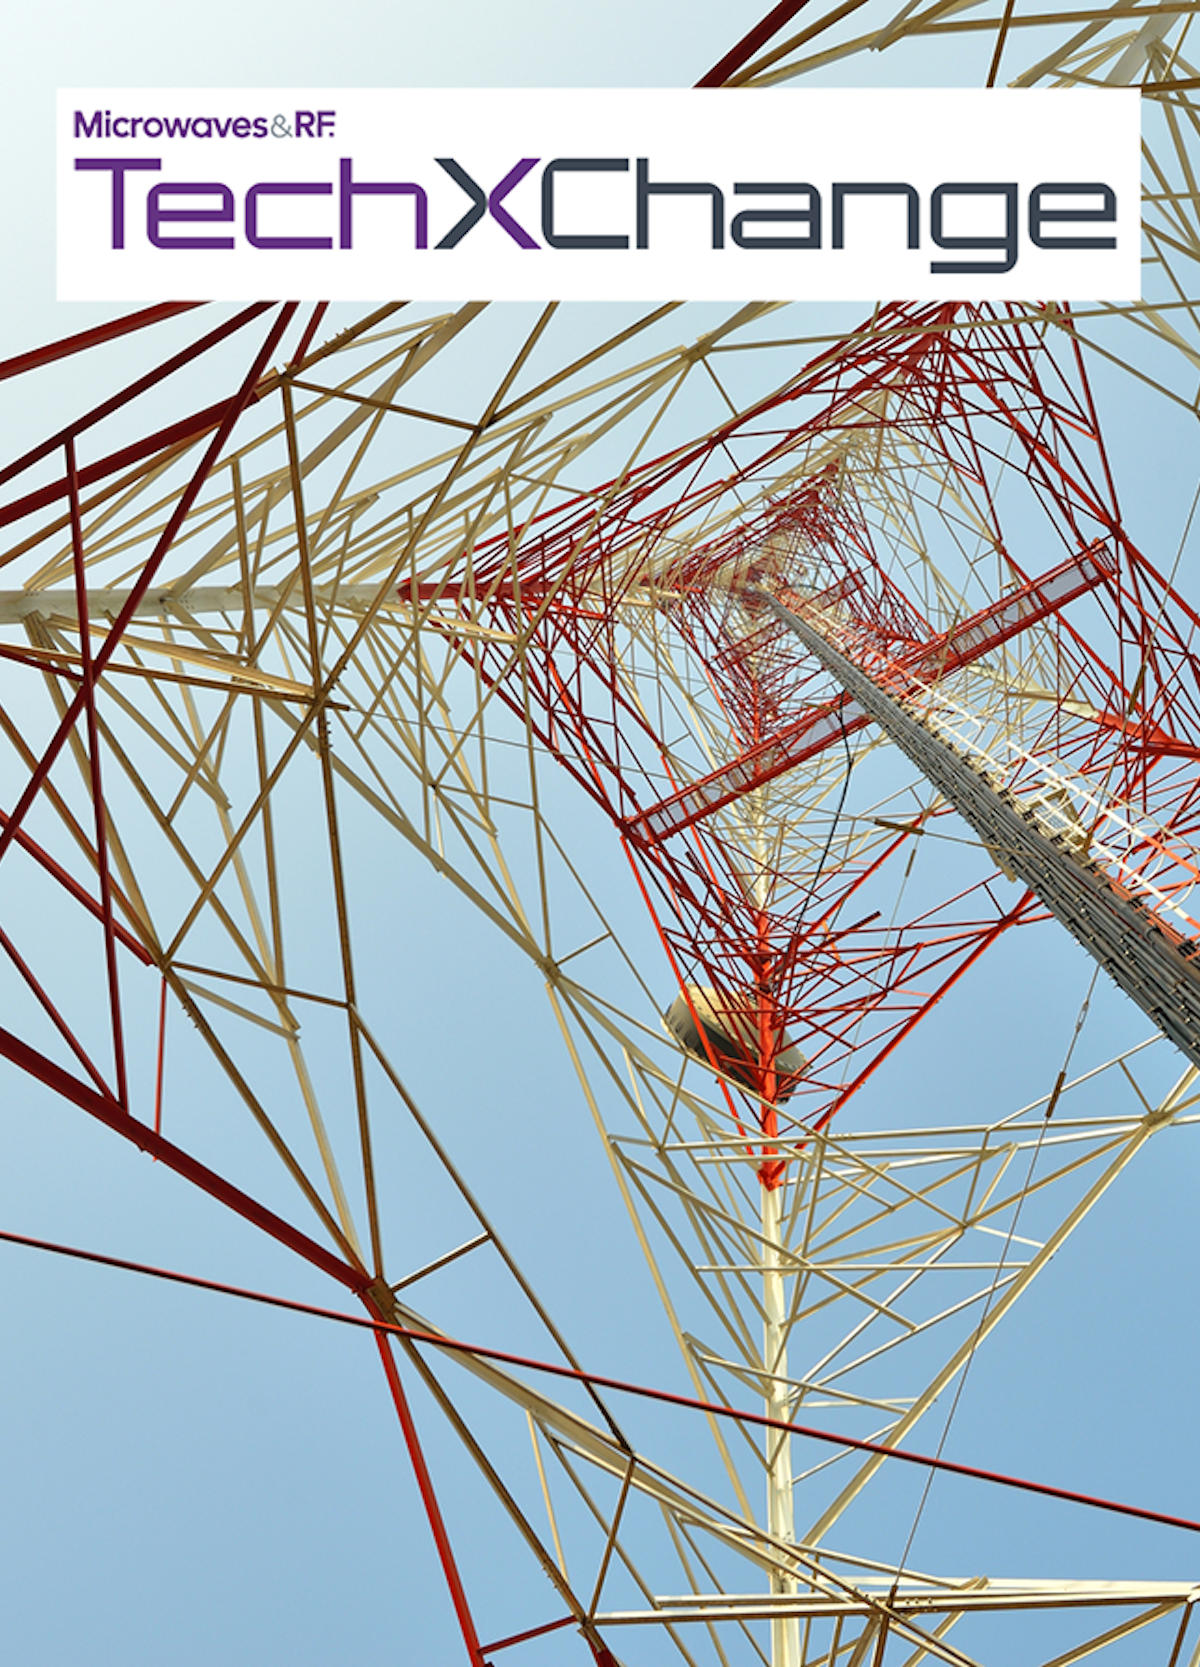 Antenna Design cover image